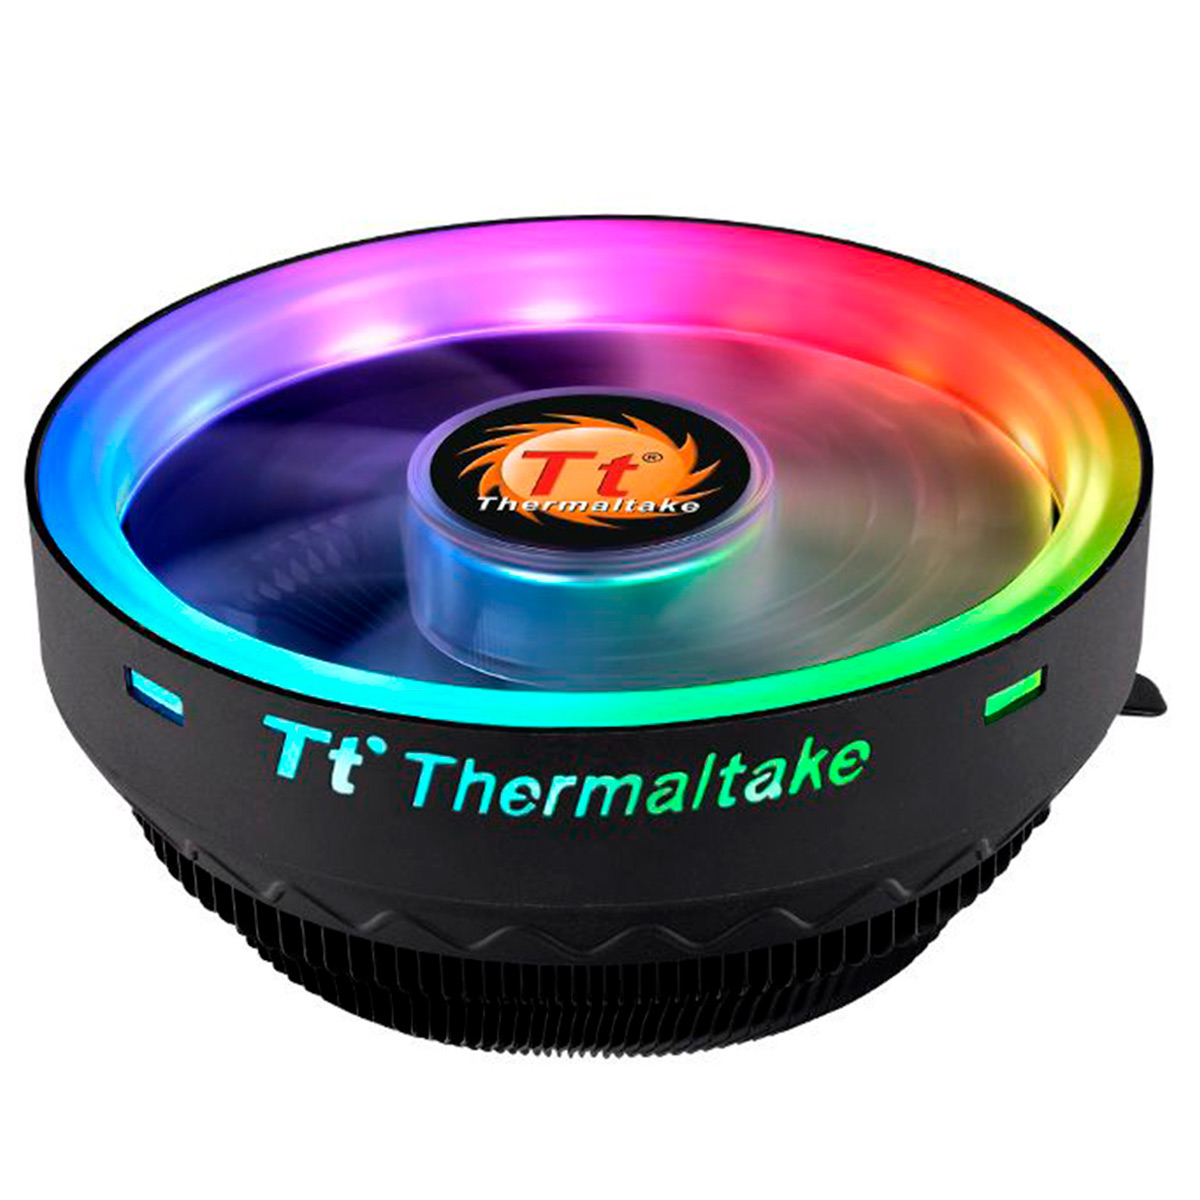 Cooler Thermaltake UX100 Aircooler (AMD / Intel) - ARGB Lightning - CL-P064-AL12SW-A